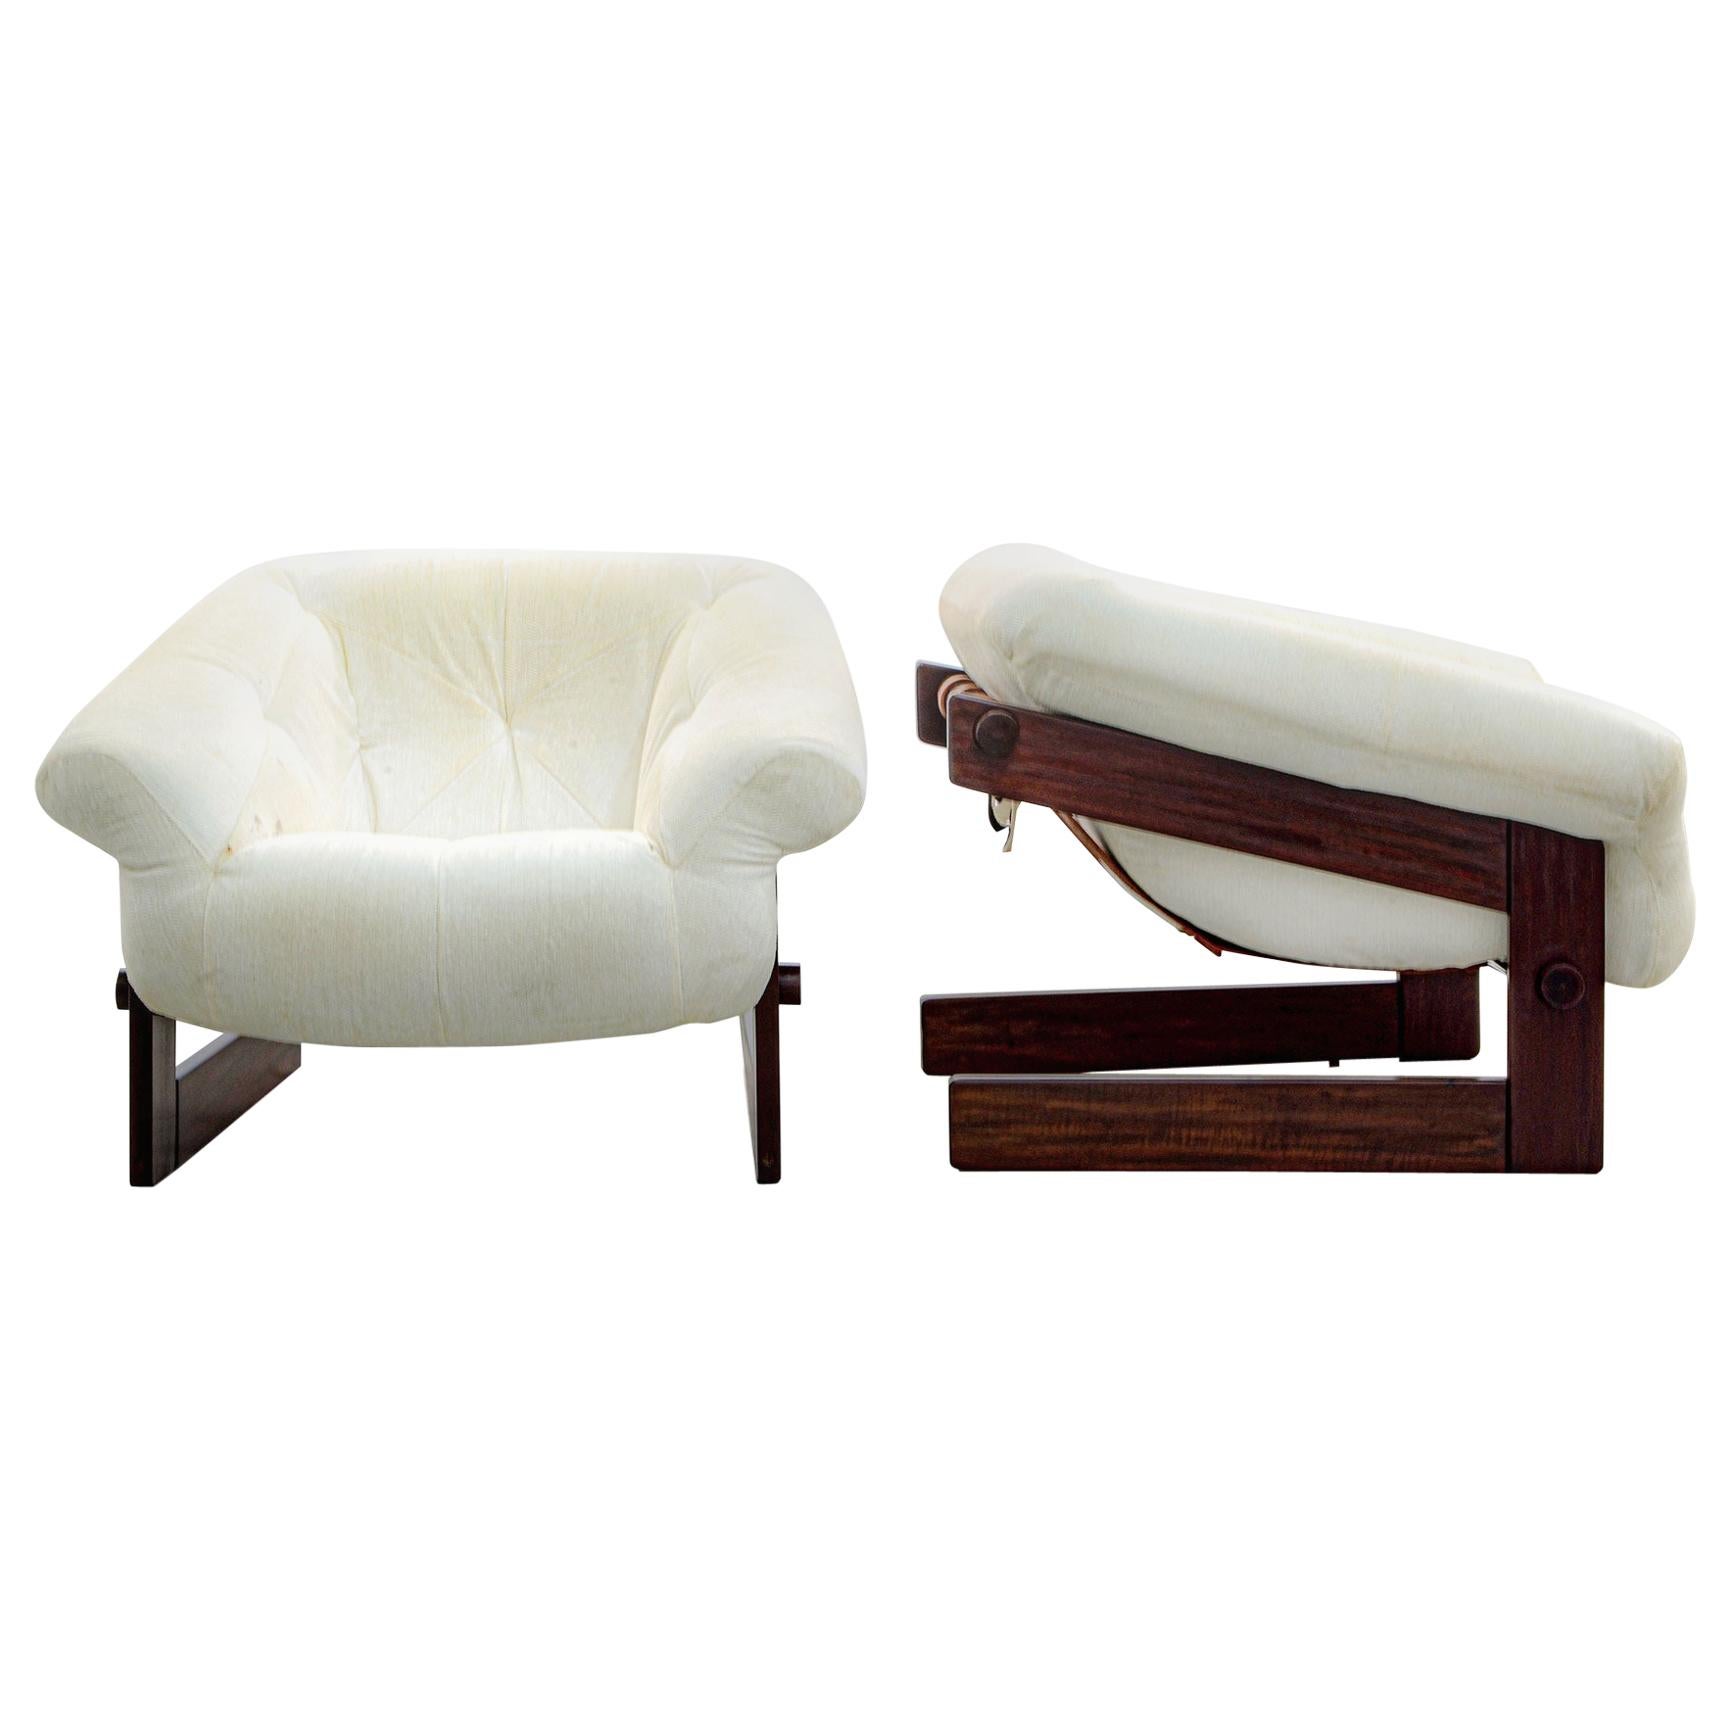 Pair of Mp 131 Lounge Chair, Jacaranda Rosewood, Brazilian Midcentury